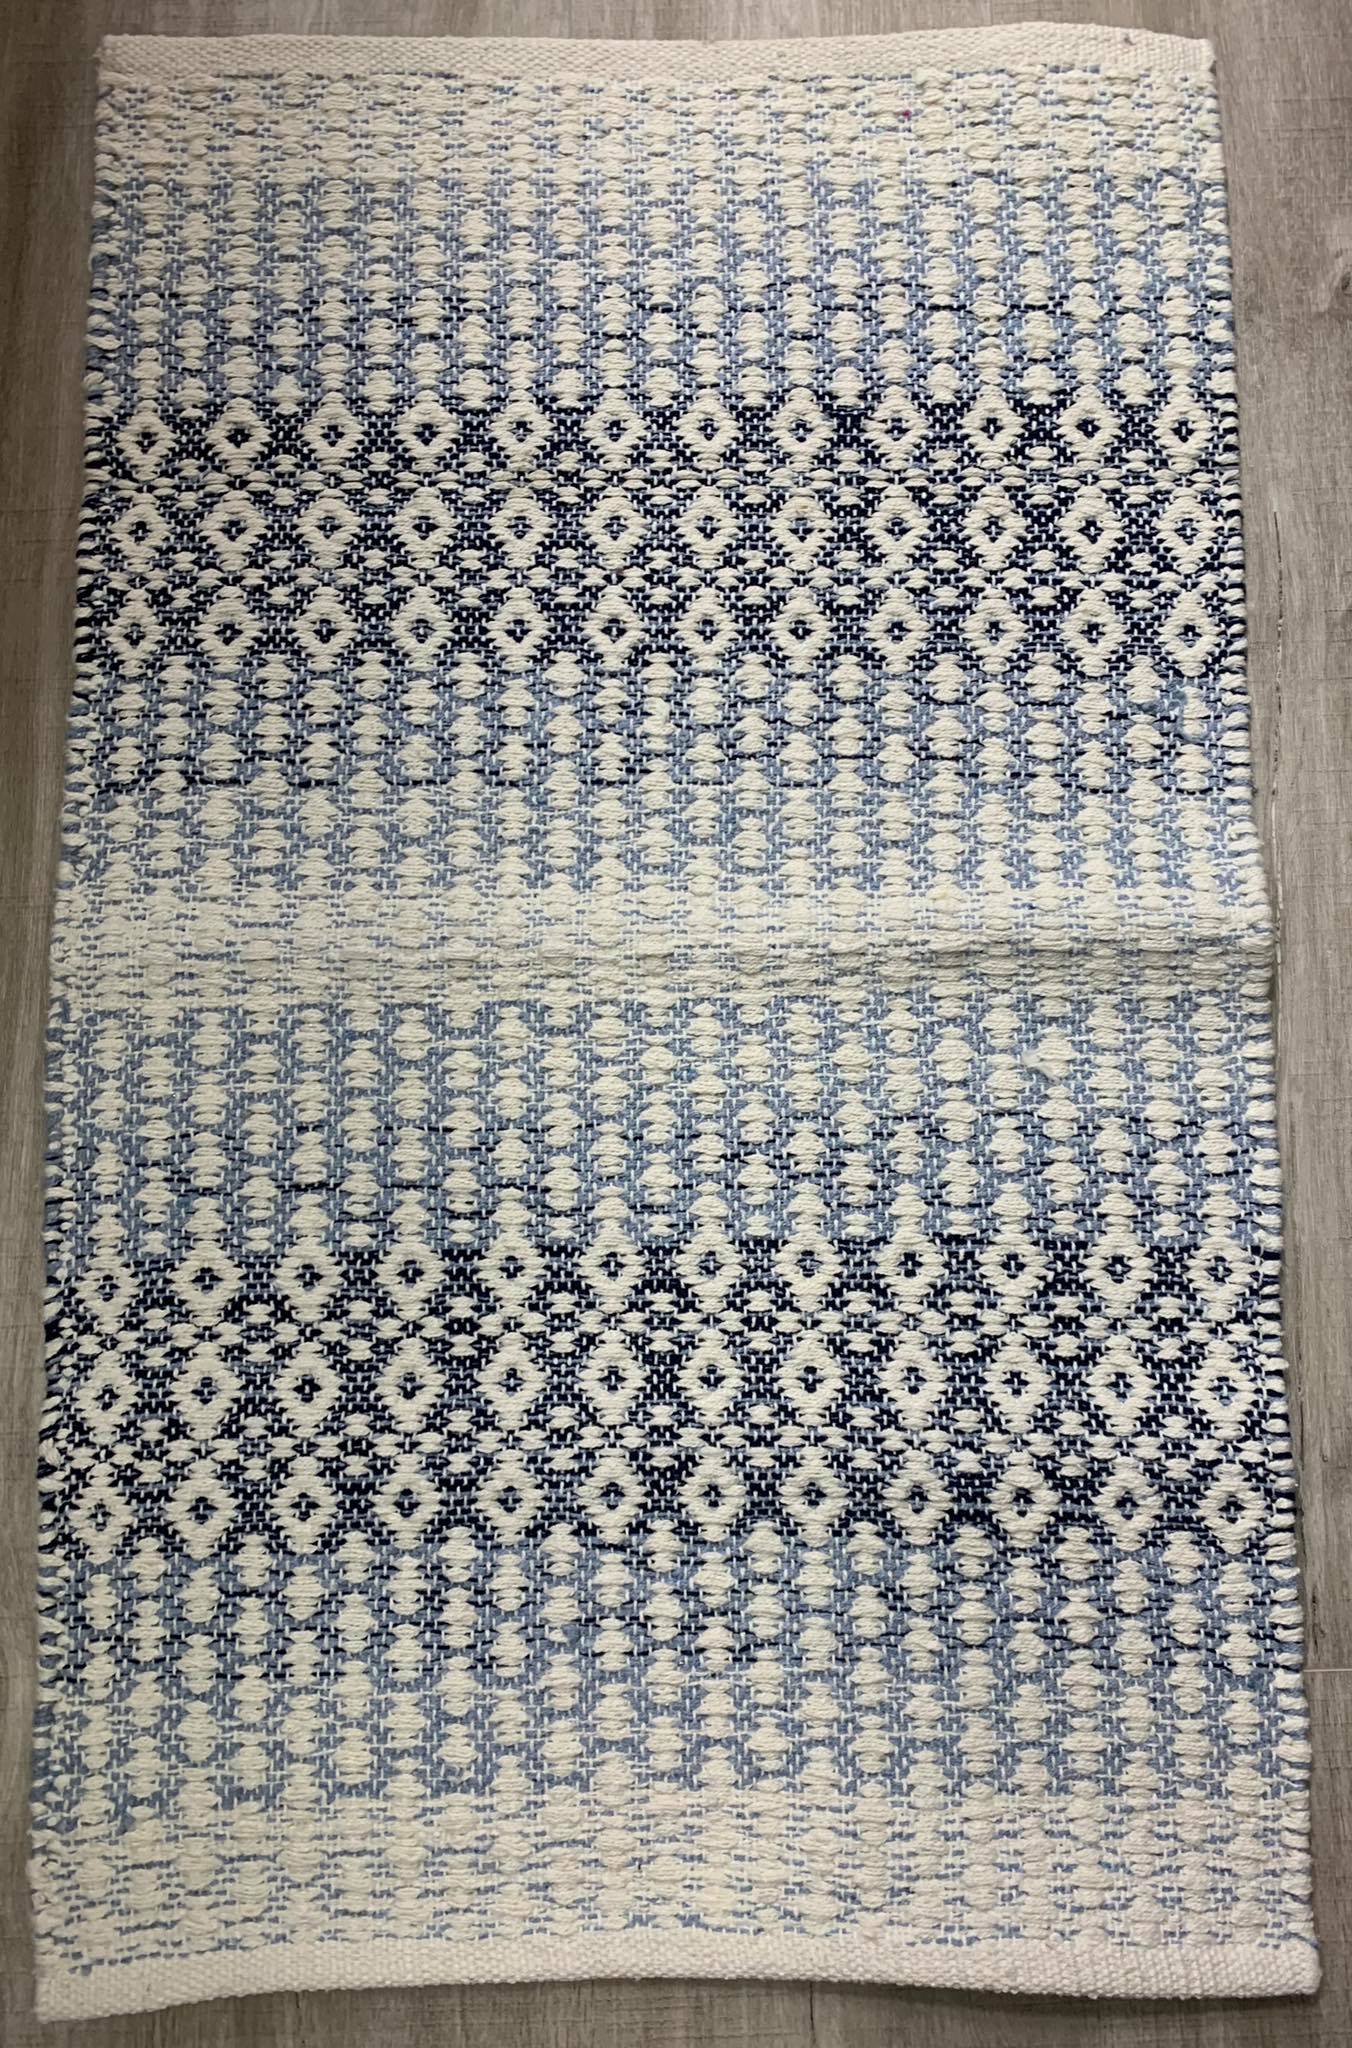 Shades of Blue deisgned cotton carpet